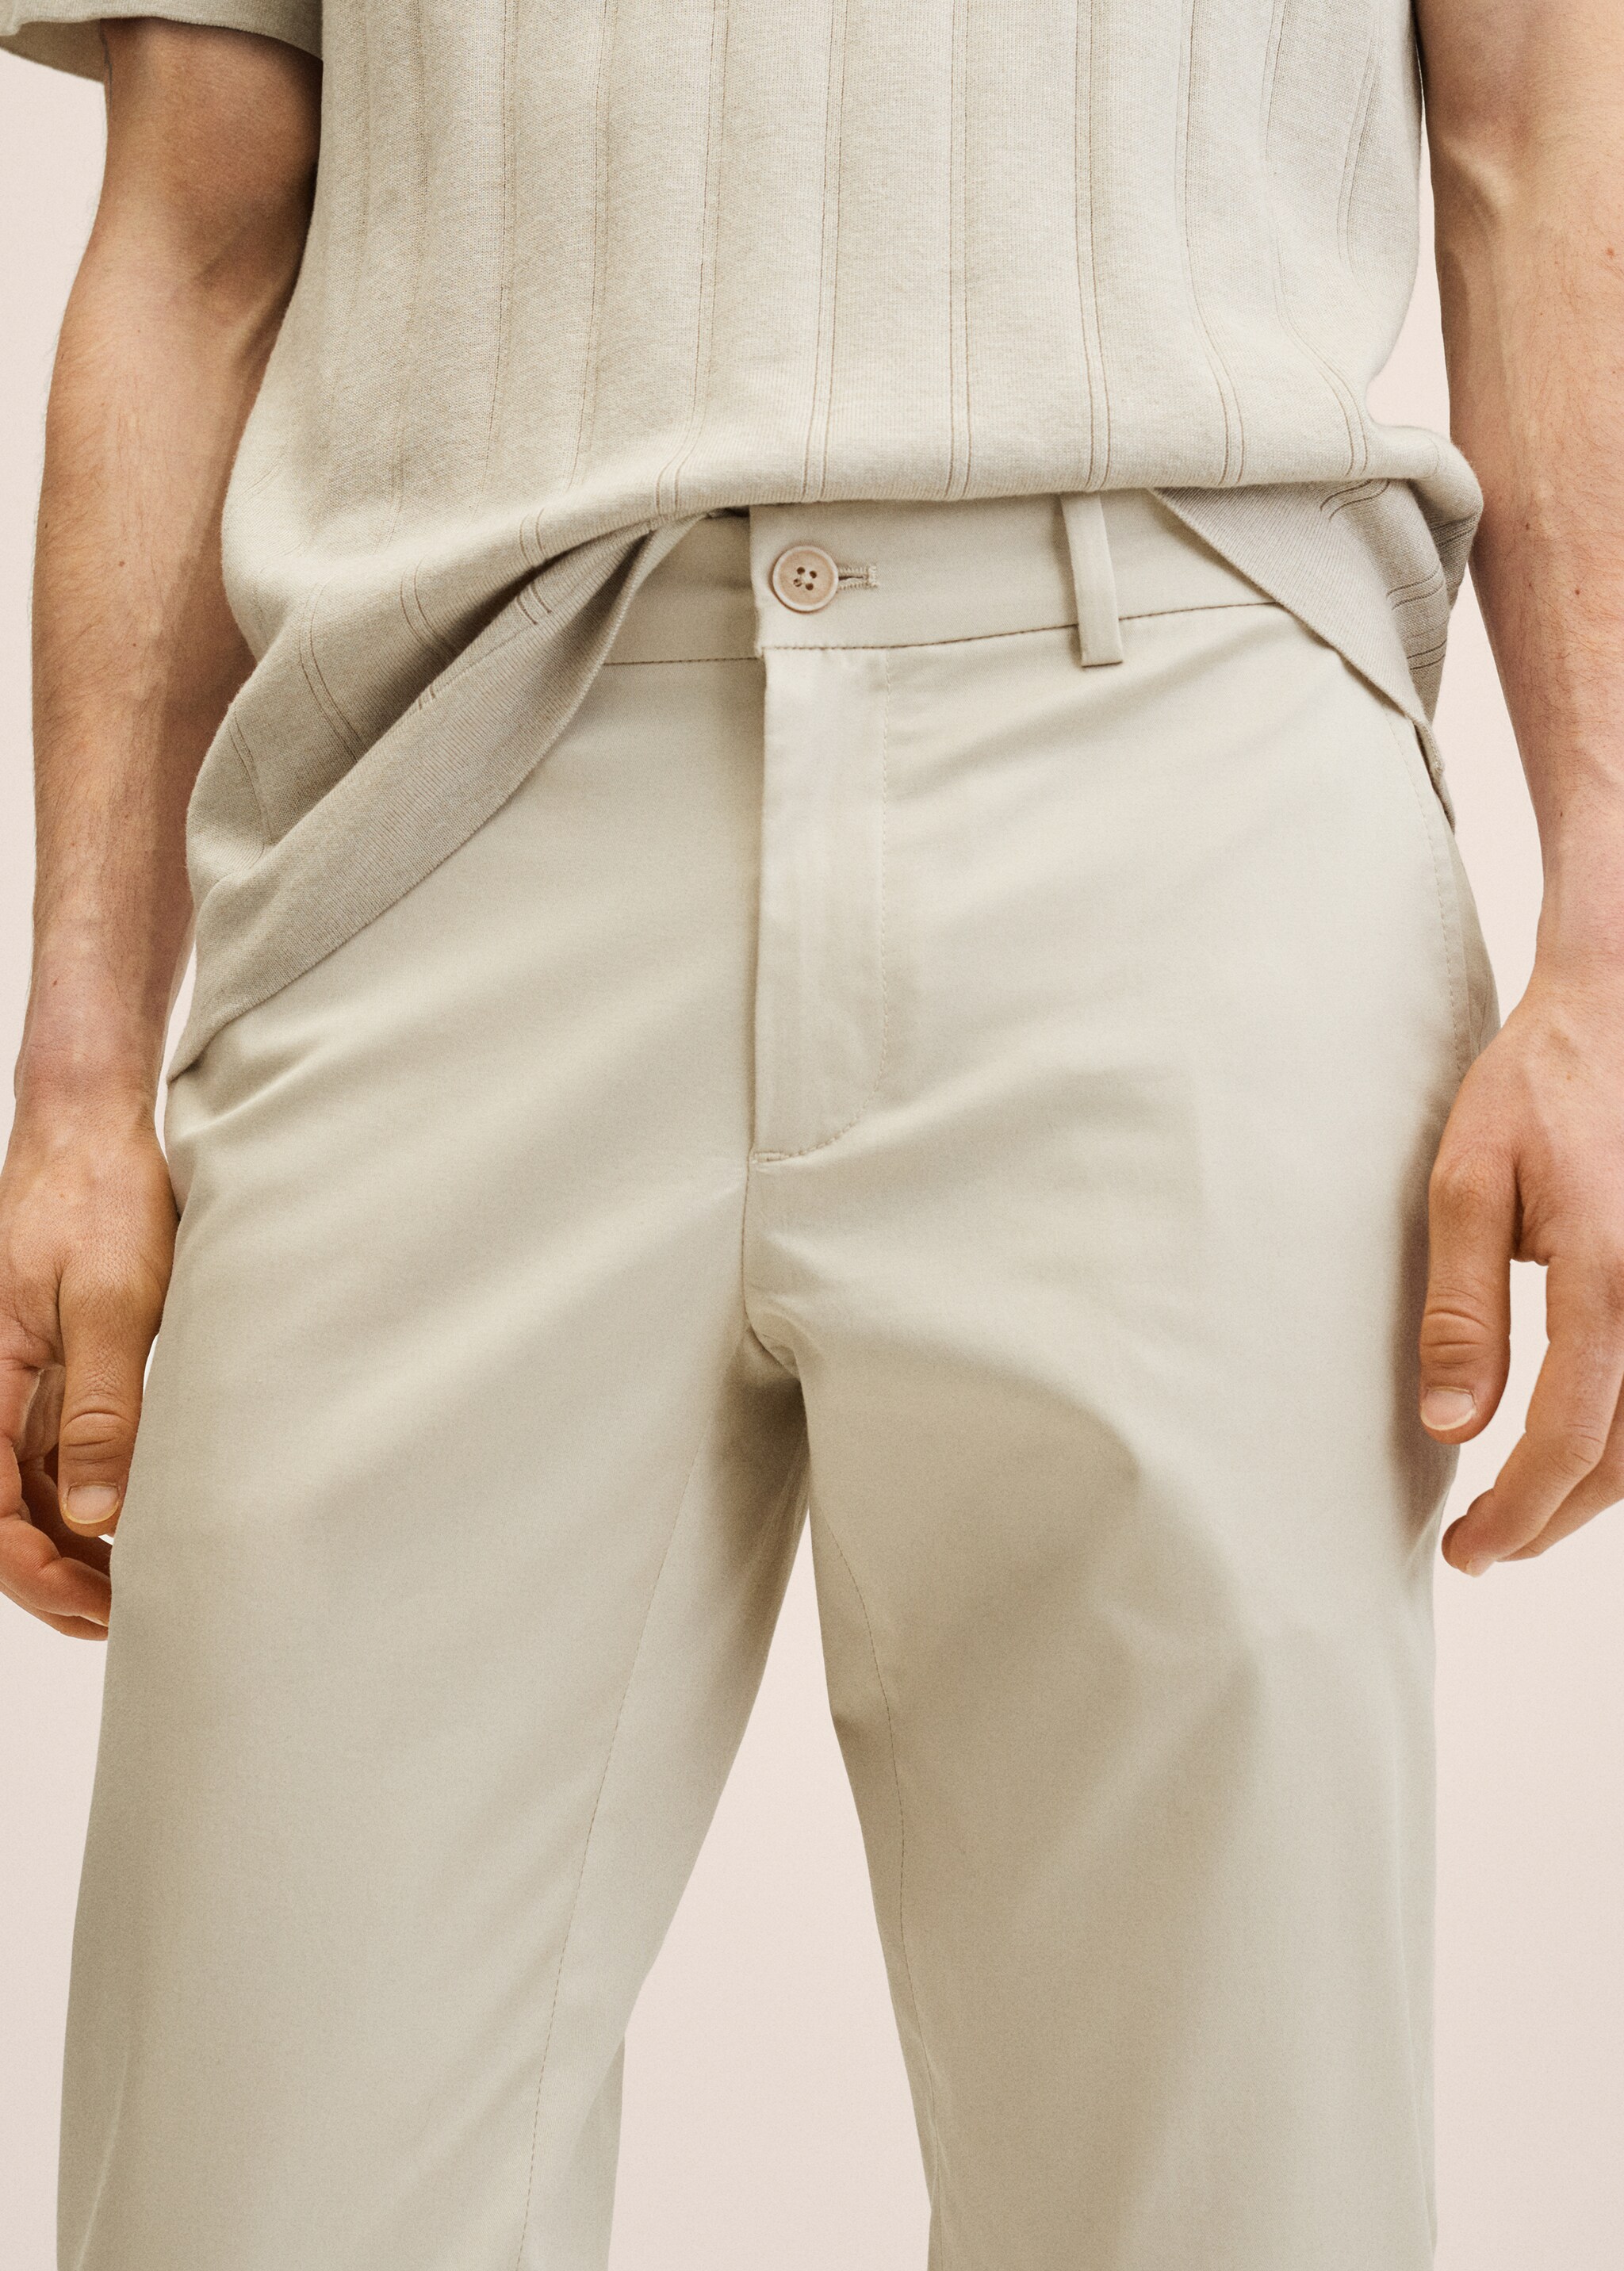 Pantalons xinesos skinny - Detall de l'article 1